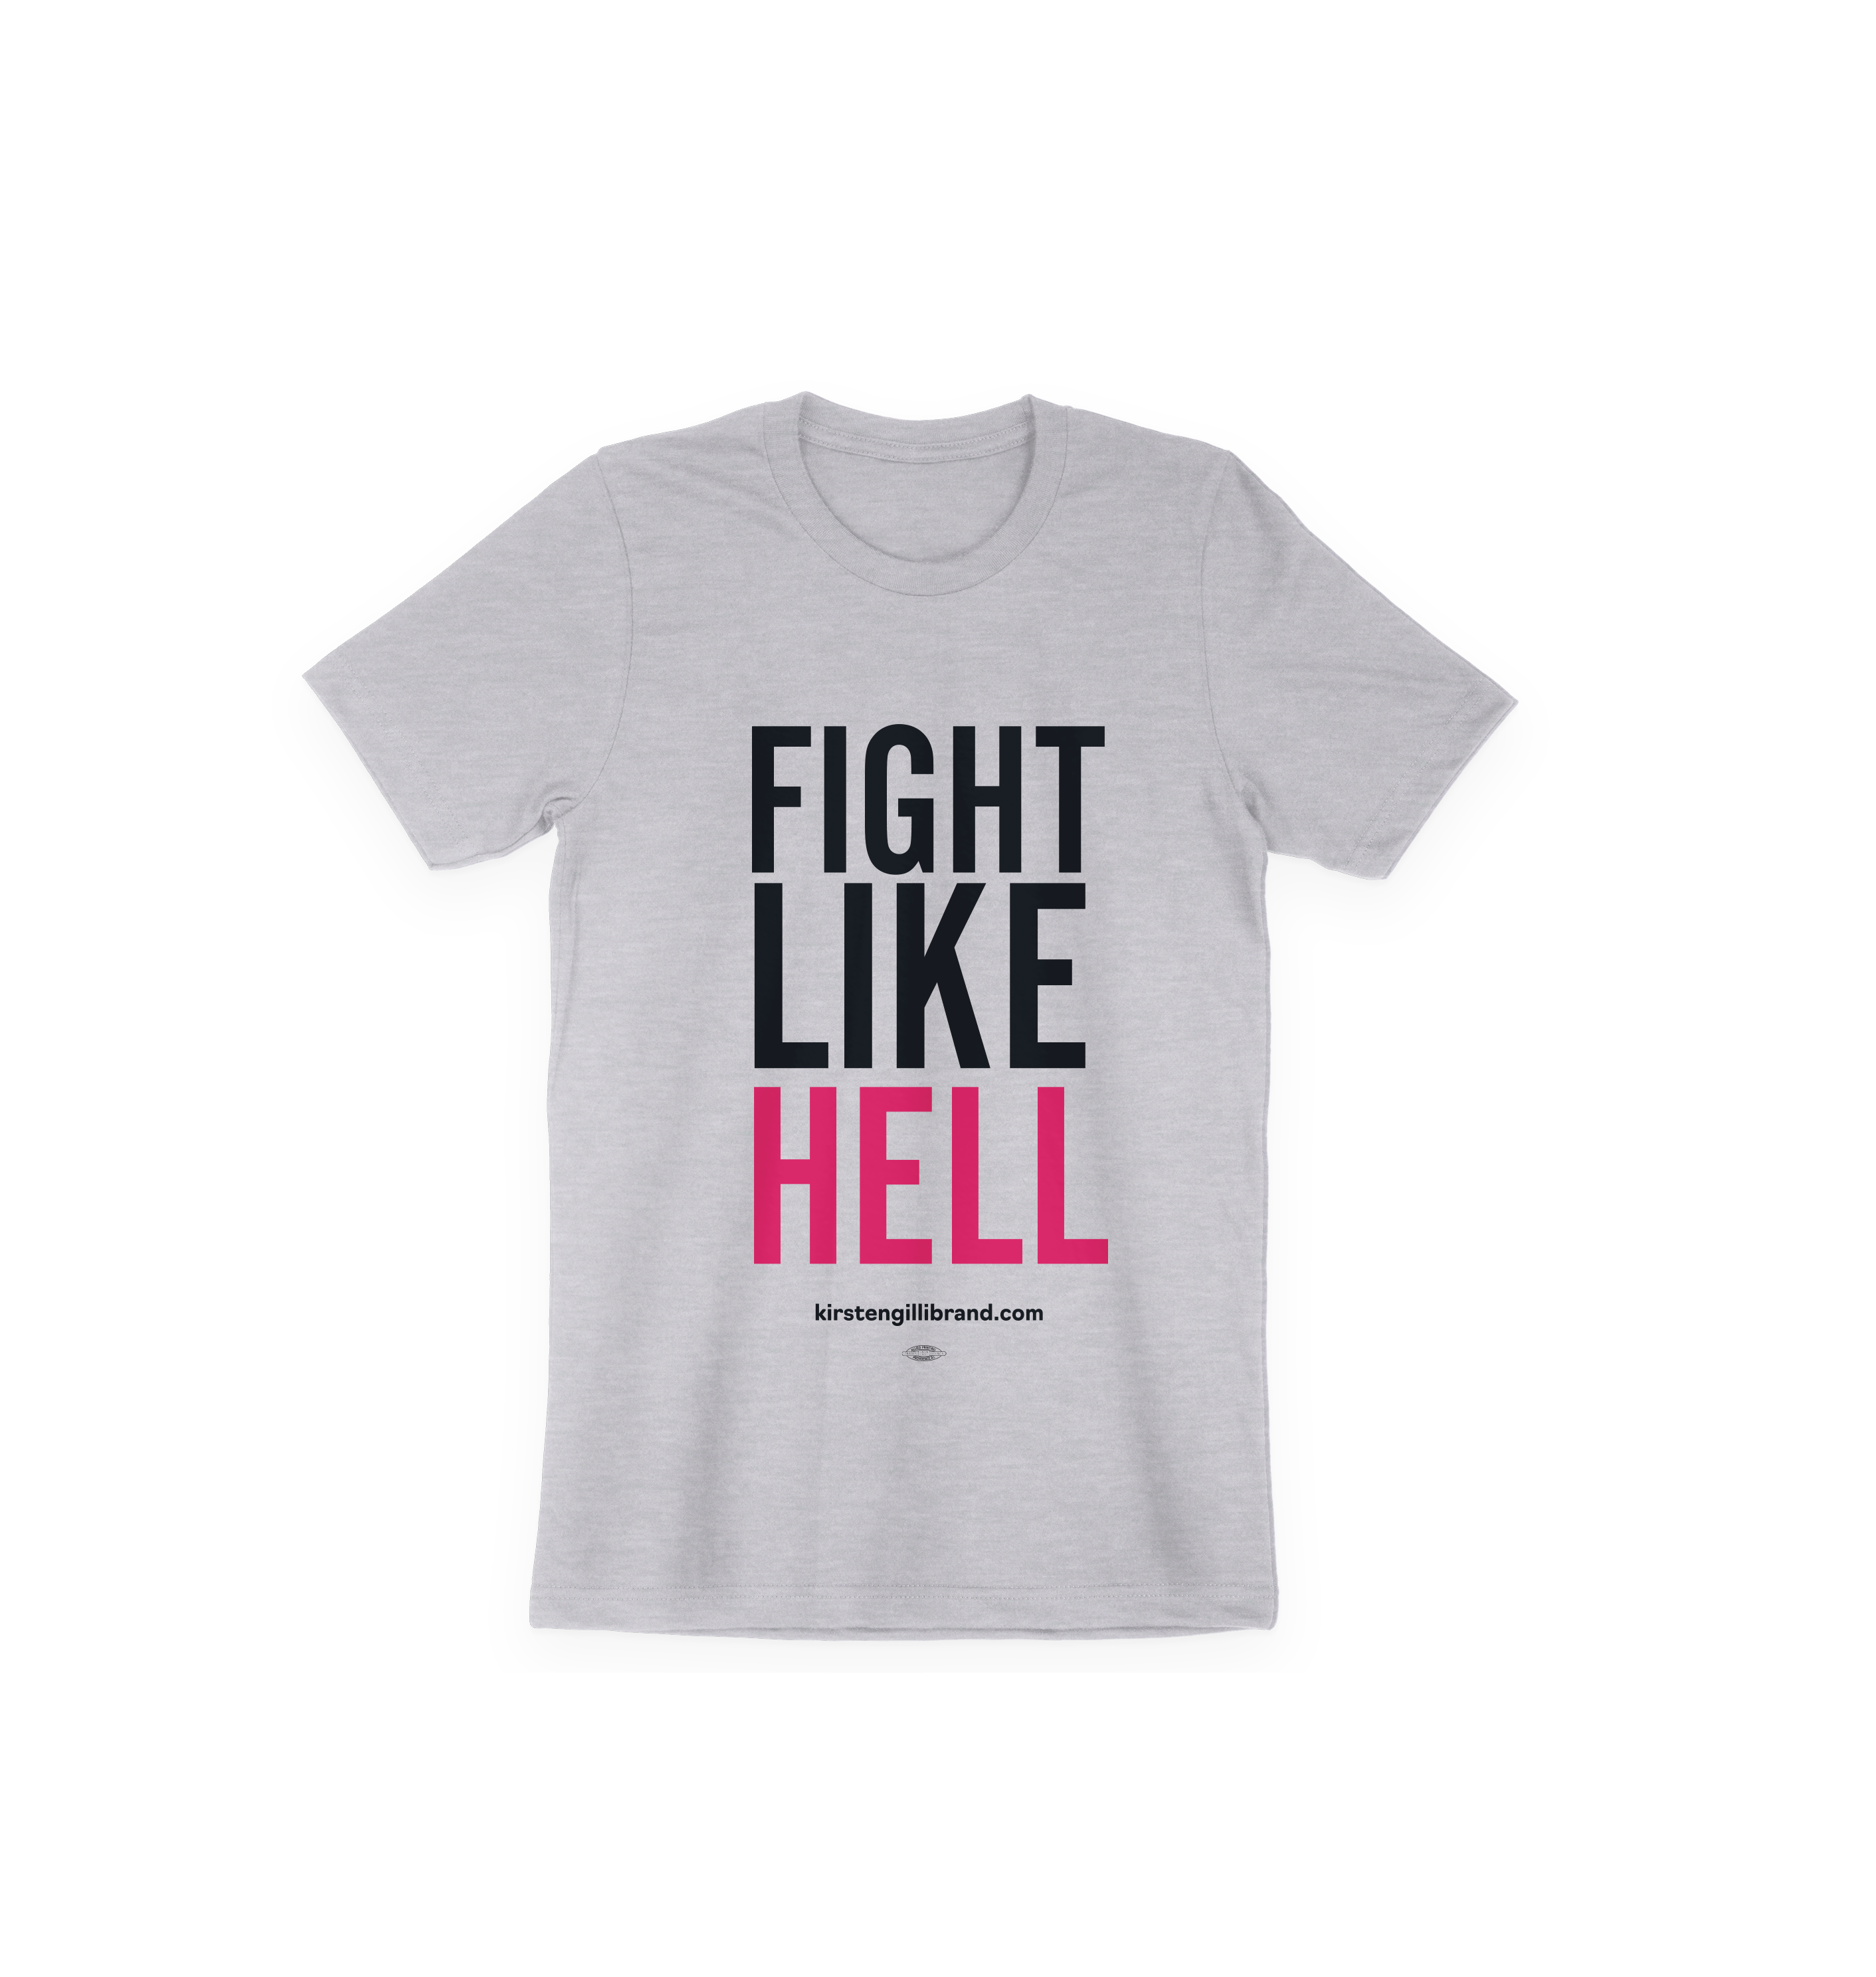 "Fight Like Hell" Gender-Neutral Tee